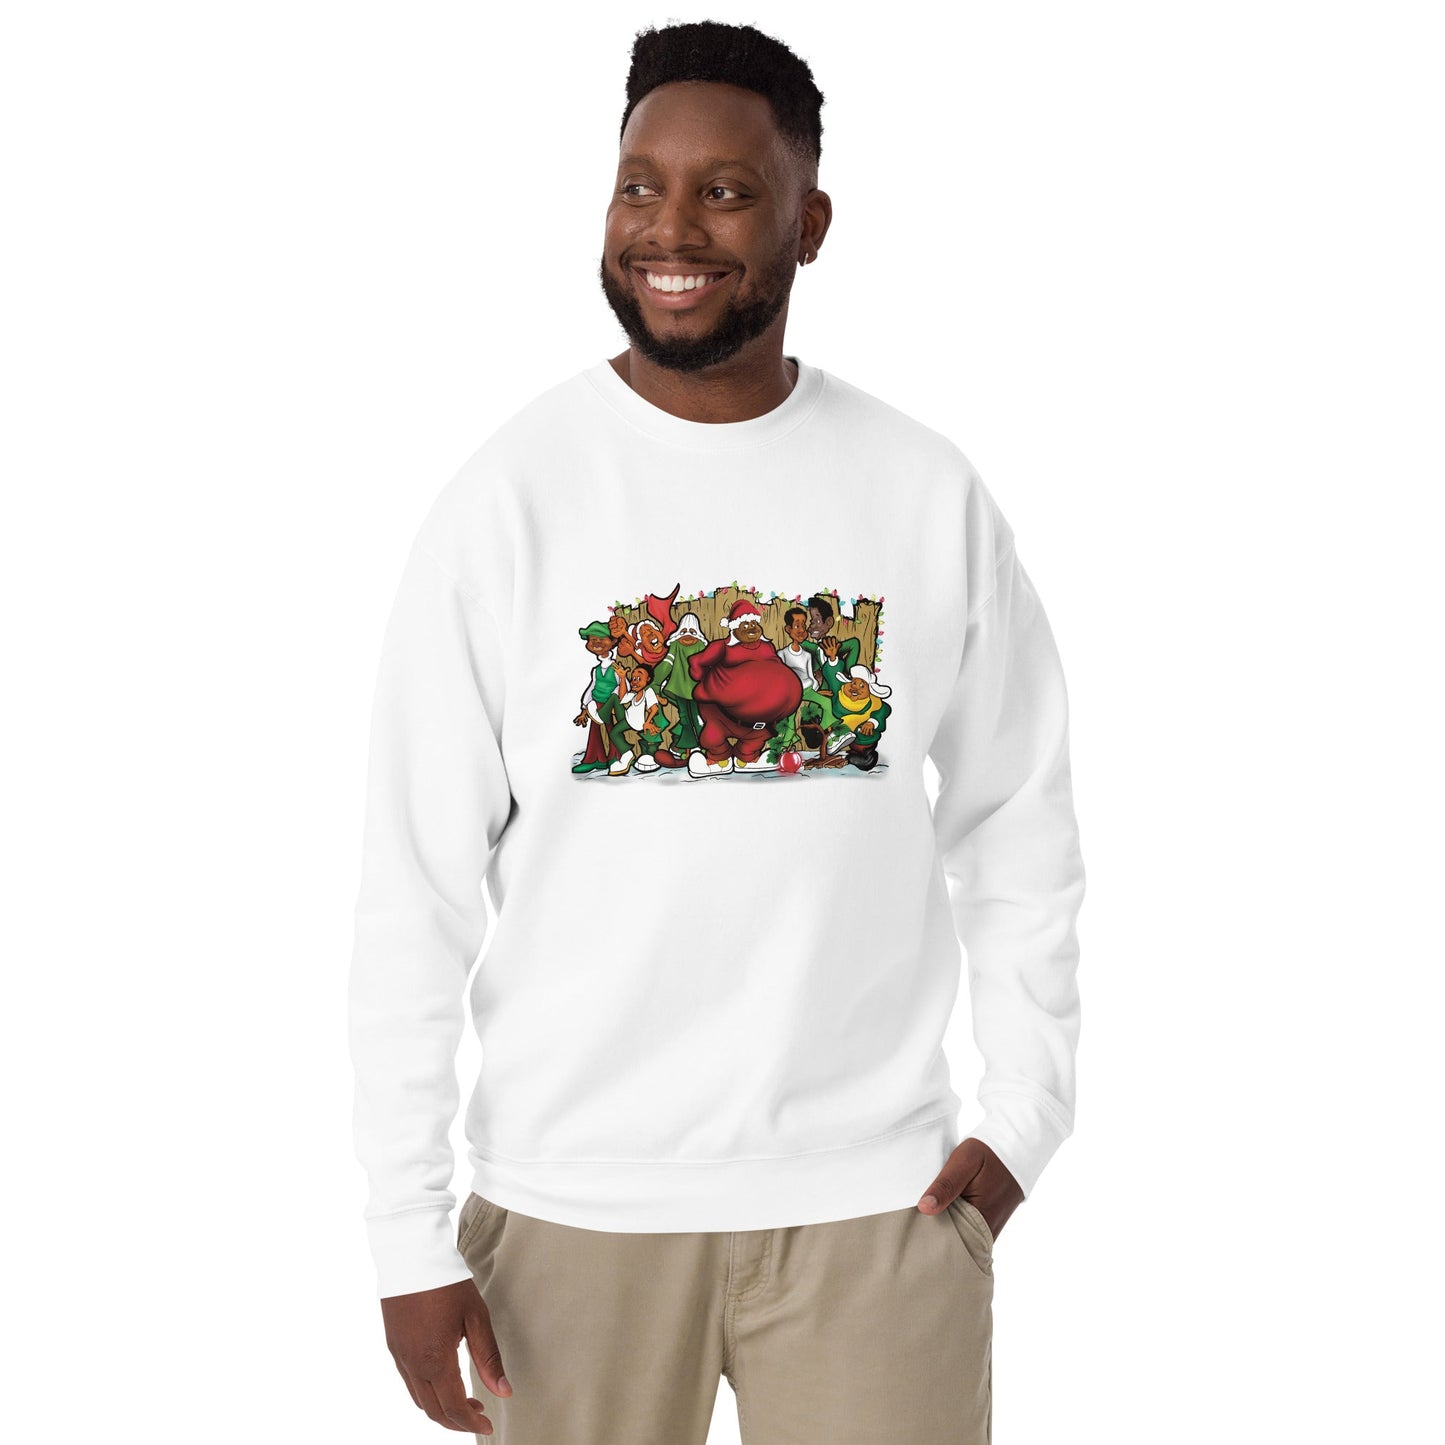 Fat Albert and Friends Christmas Unisex Sweatshirt - smuniqueshirts